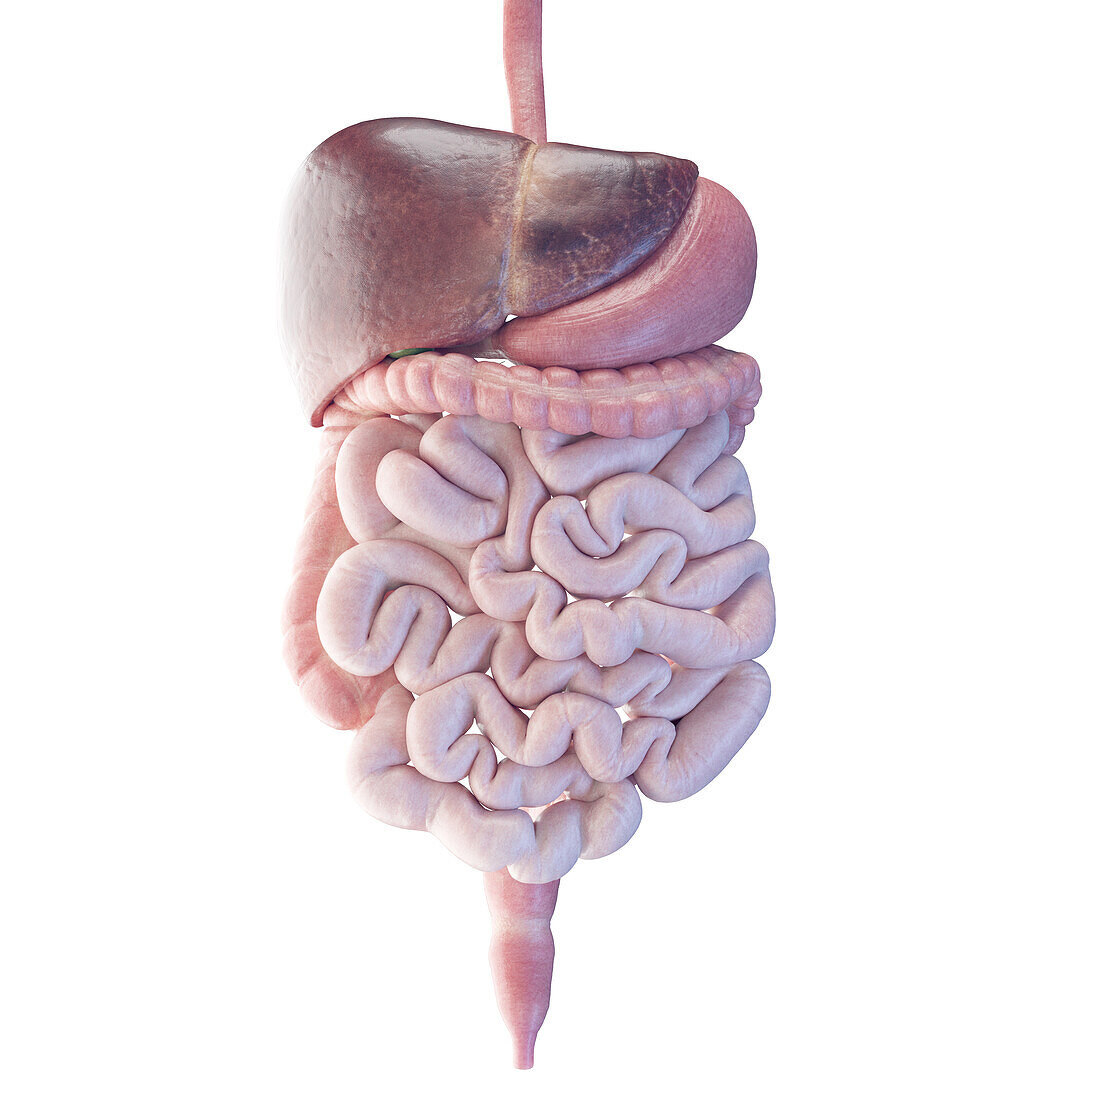 Digestive organs, illustration